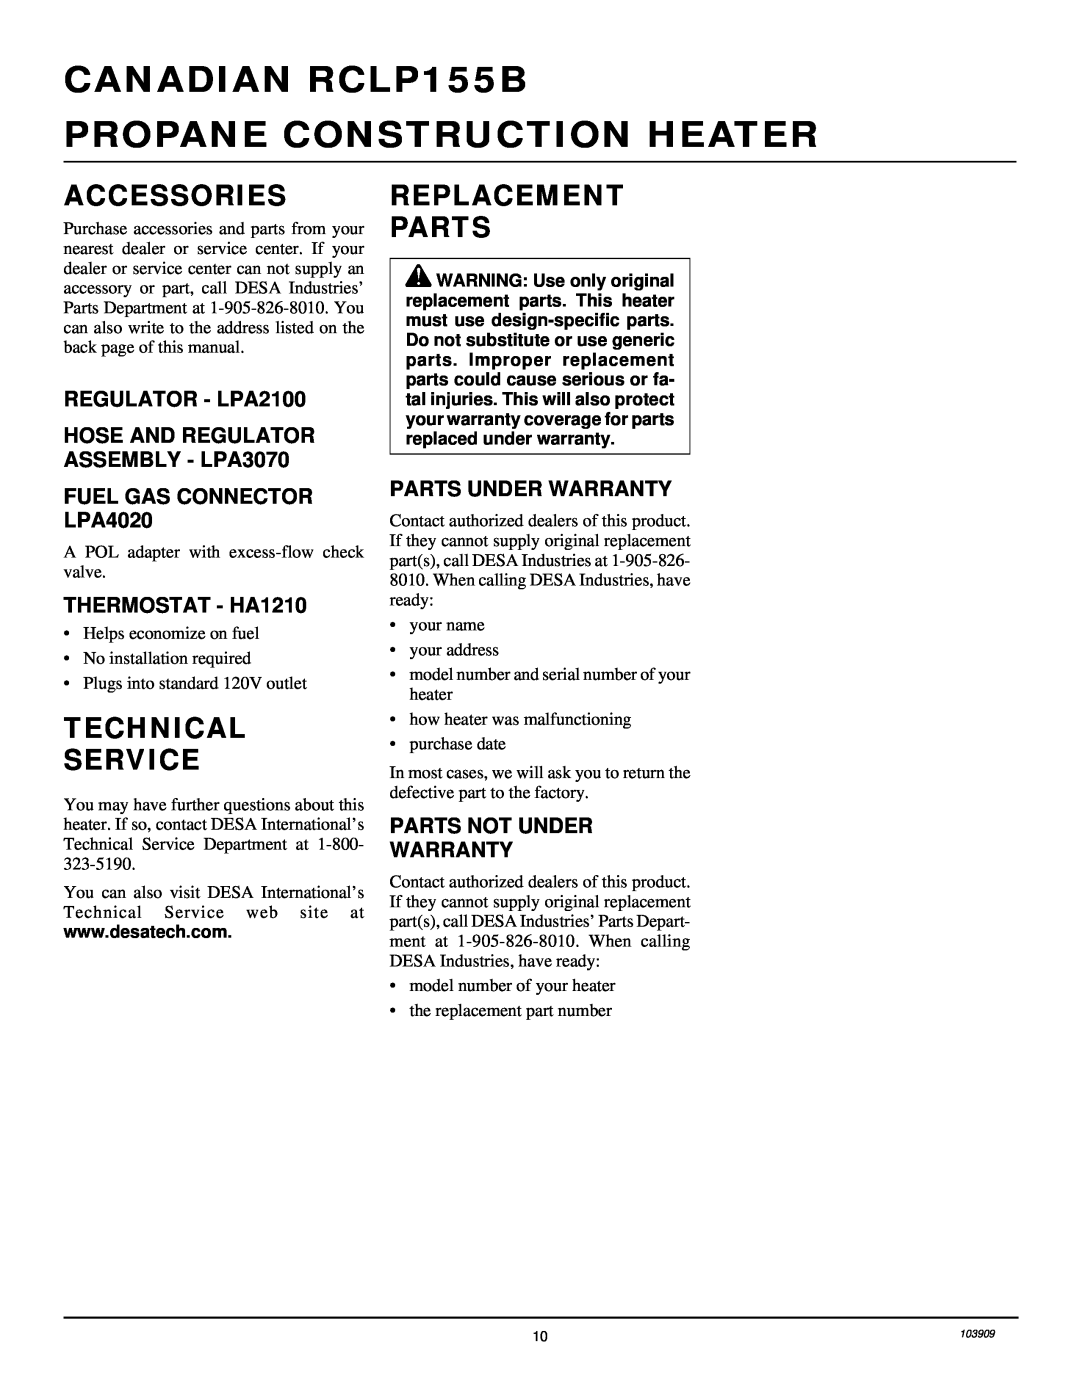 Desa RCLP155B Accessories, Technical Service, Replacement Parts, REGULATOR - LPA2100 HOSE AND REGULATOR ASSEMBLY - LPA3070 